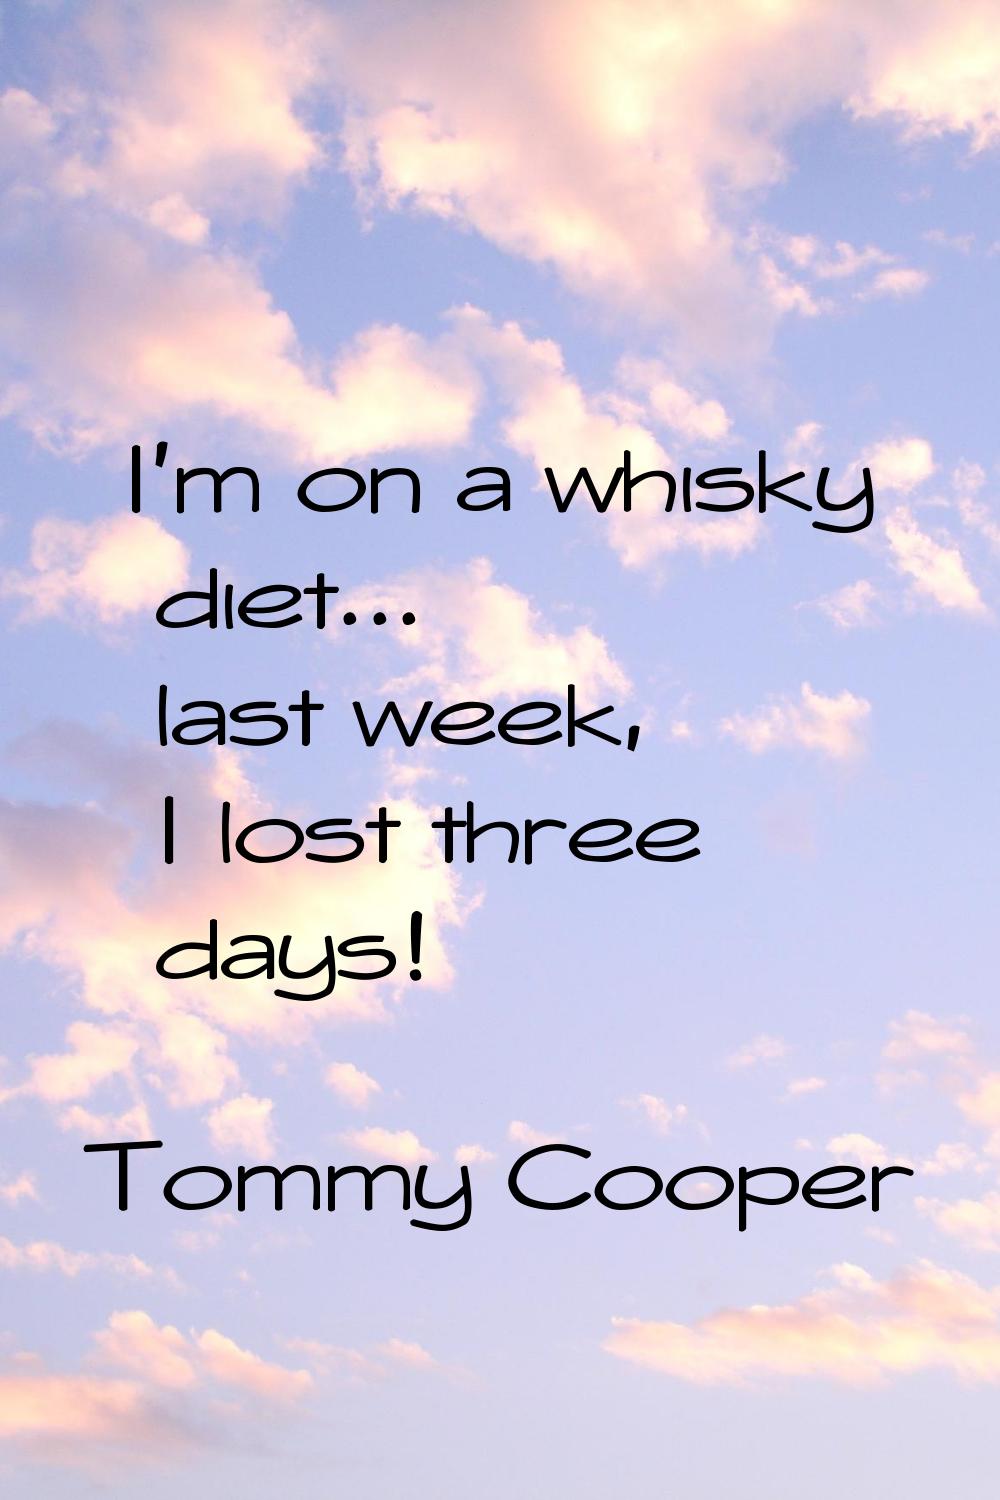 I'm on a whisky diet... last week, I lost three days!